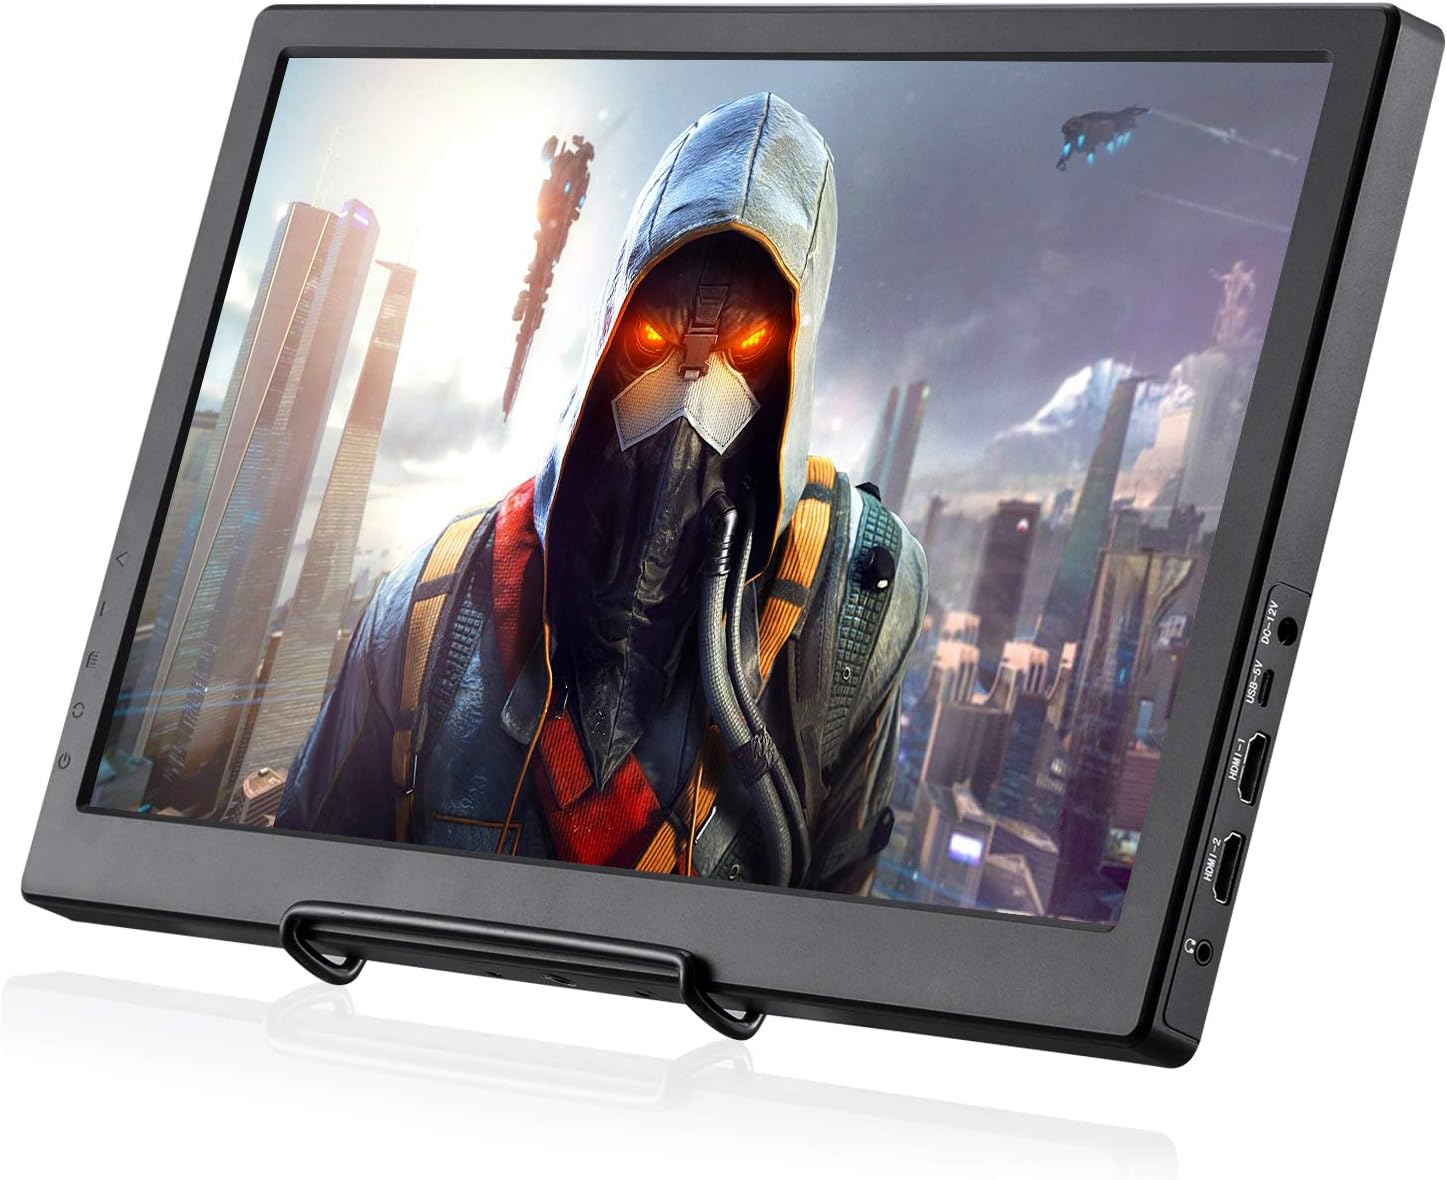 KALESMART Portable Gaming Monitor 15.6 Inch Full HD PC [...]